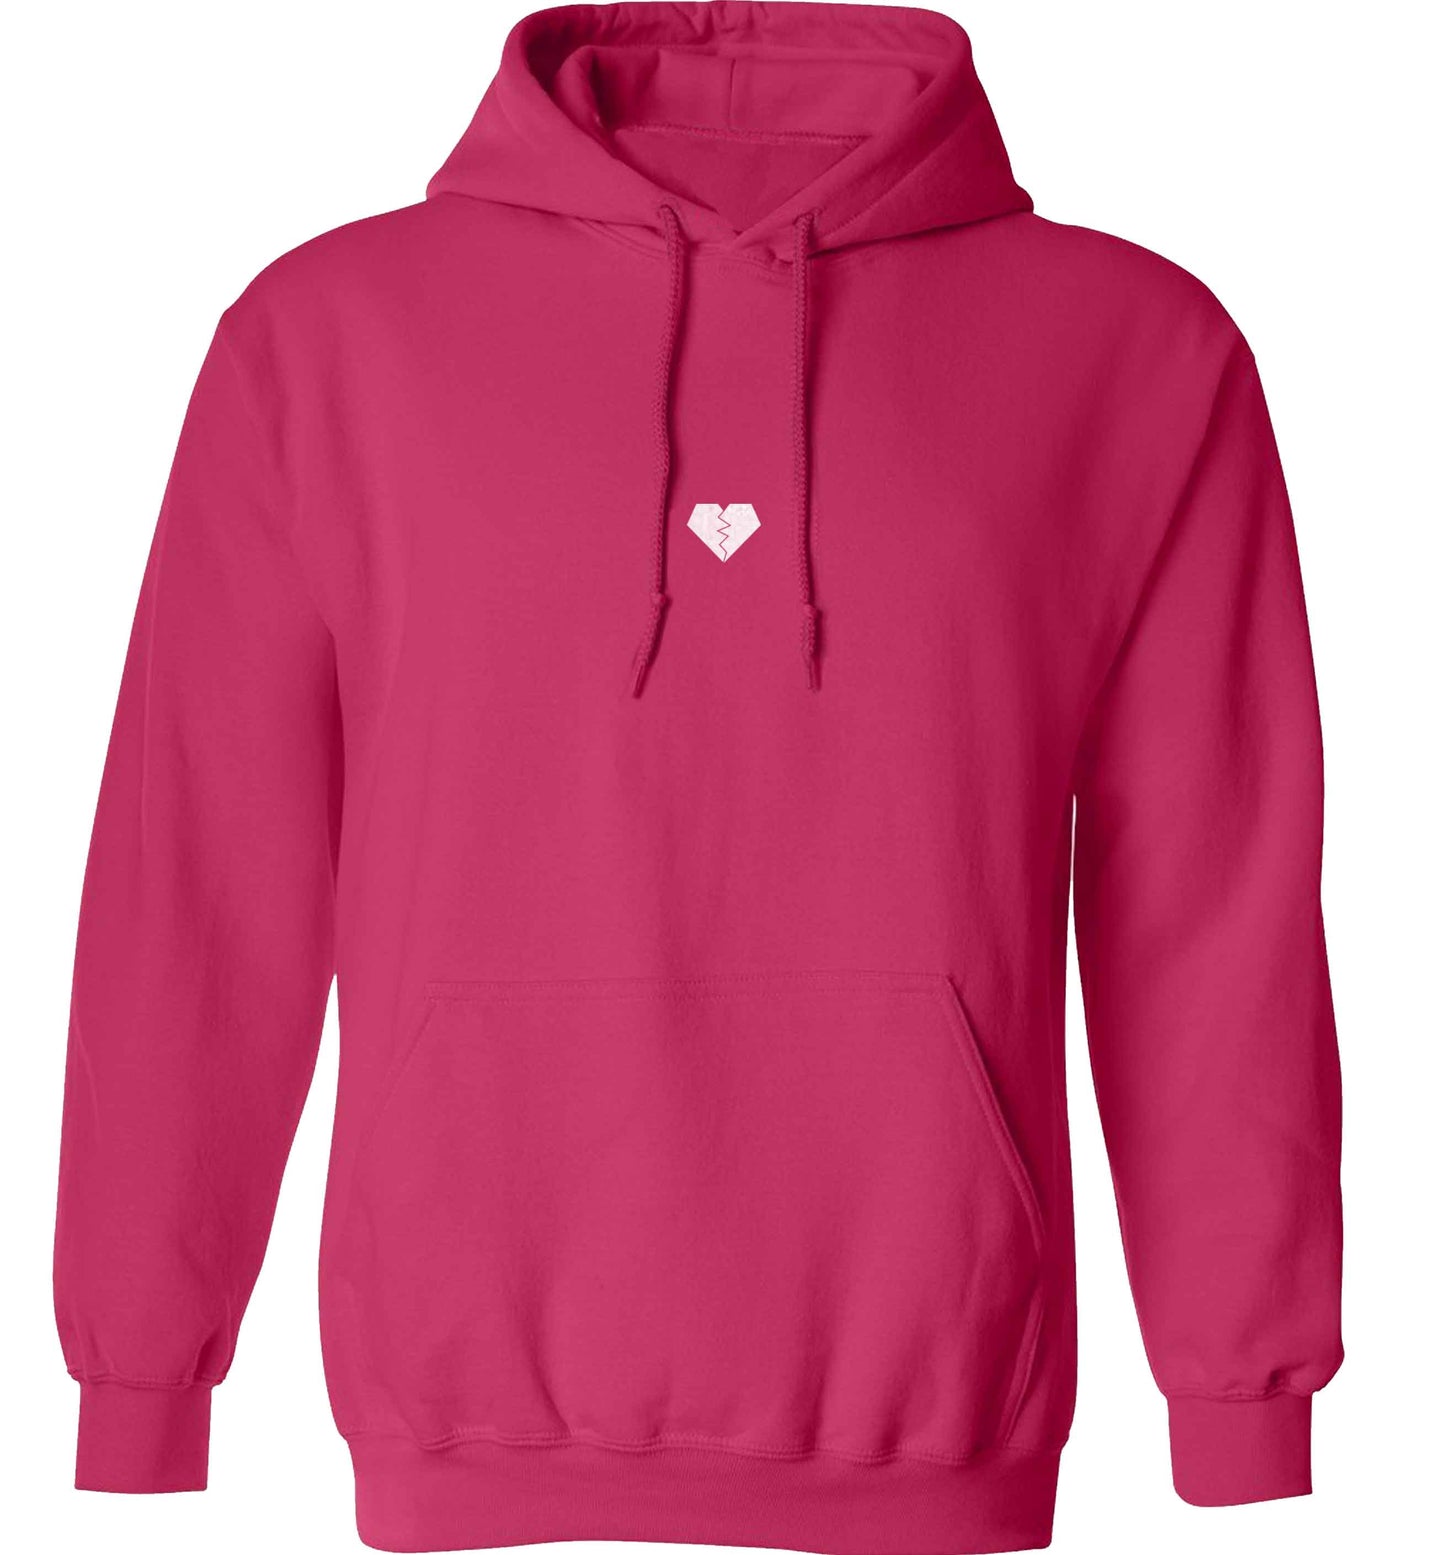 Tiny broken heart adults unisex pink hoodie 2XL